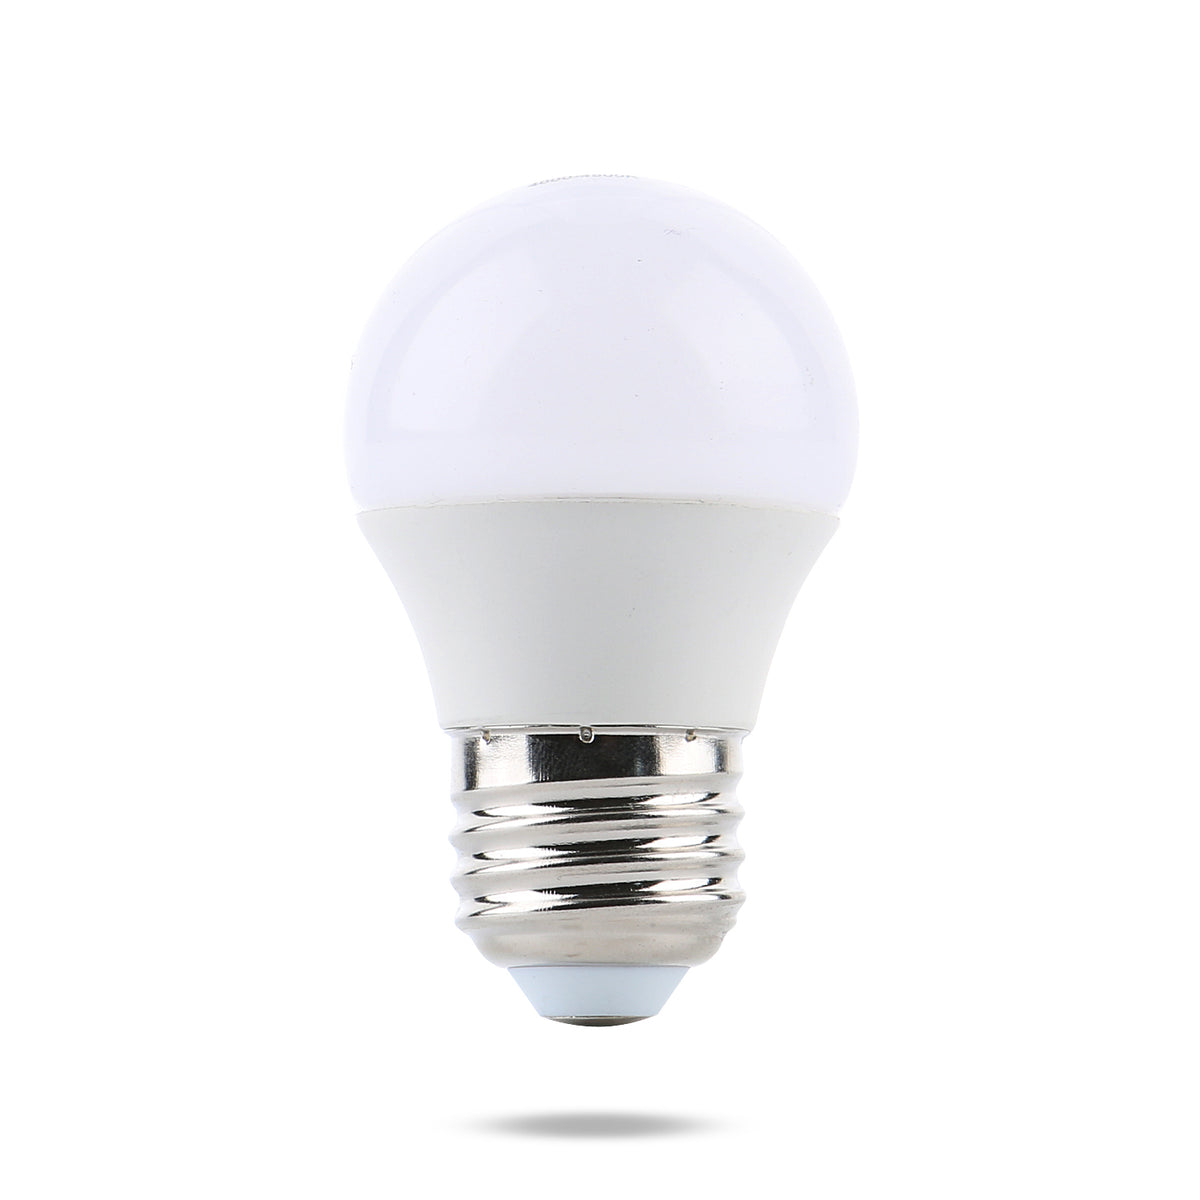 Let op Wereldwijd Miniatuur 1 Watt LED Bulb | 12V DC LED Light Bulb | Substantial Energy Savings! – Watt -a-Light